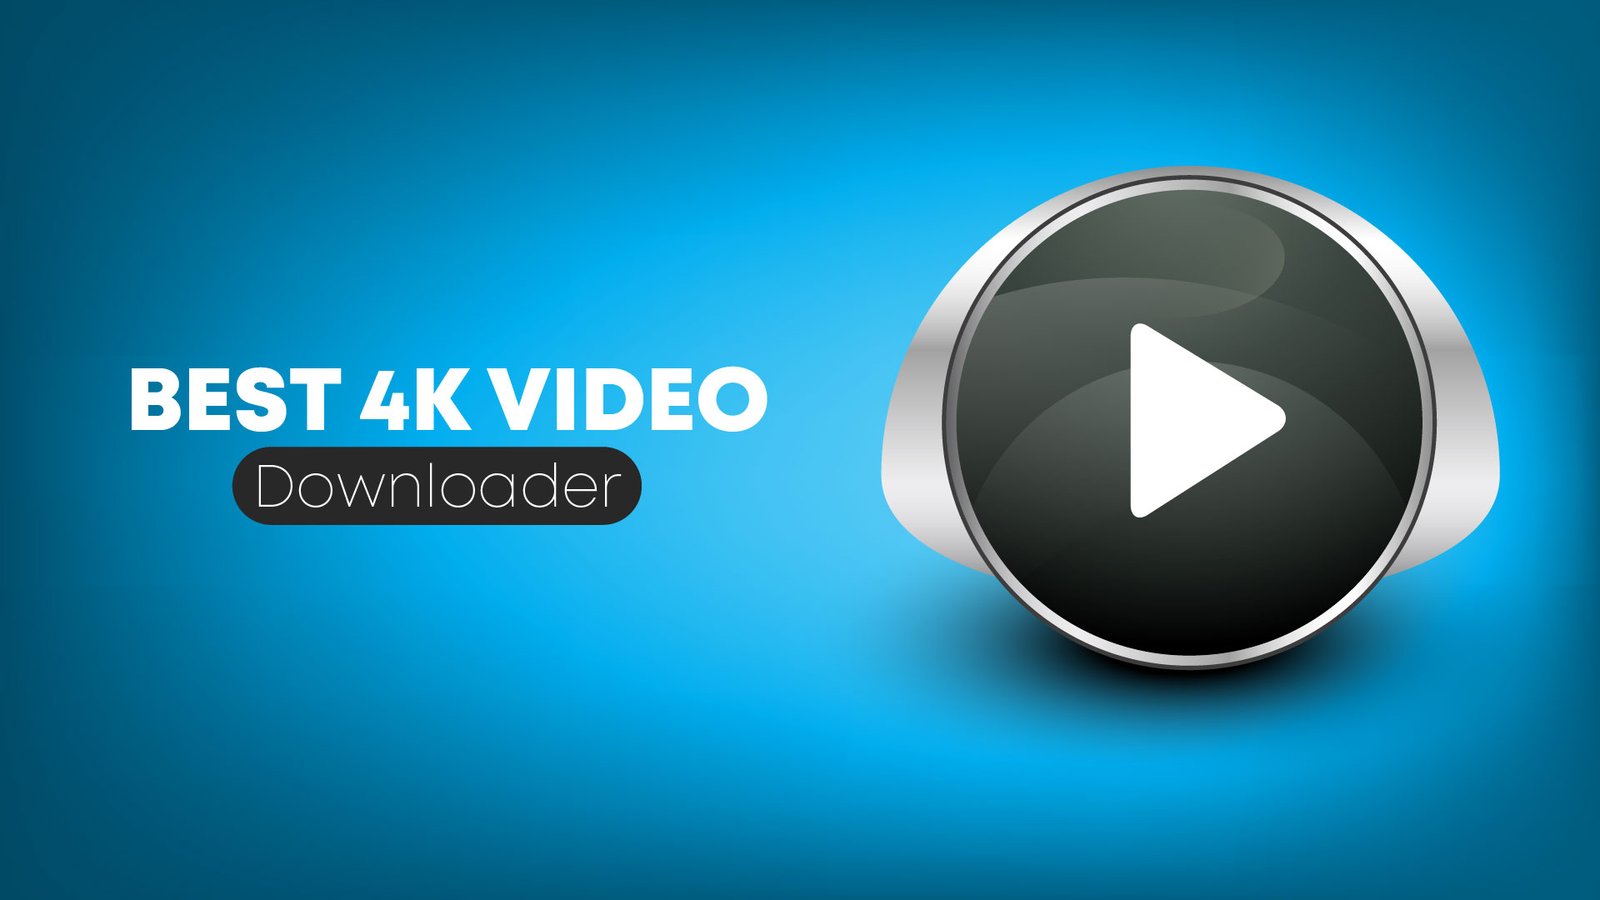 4k video downloader open source